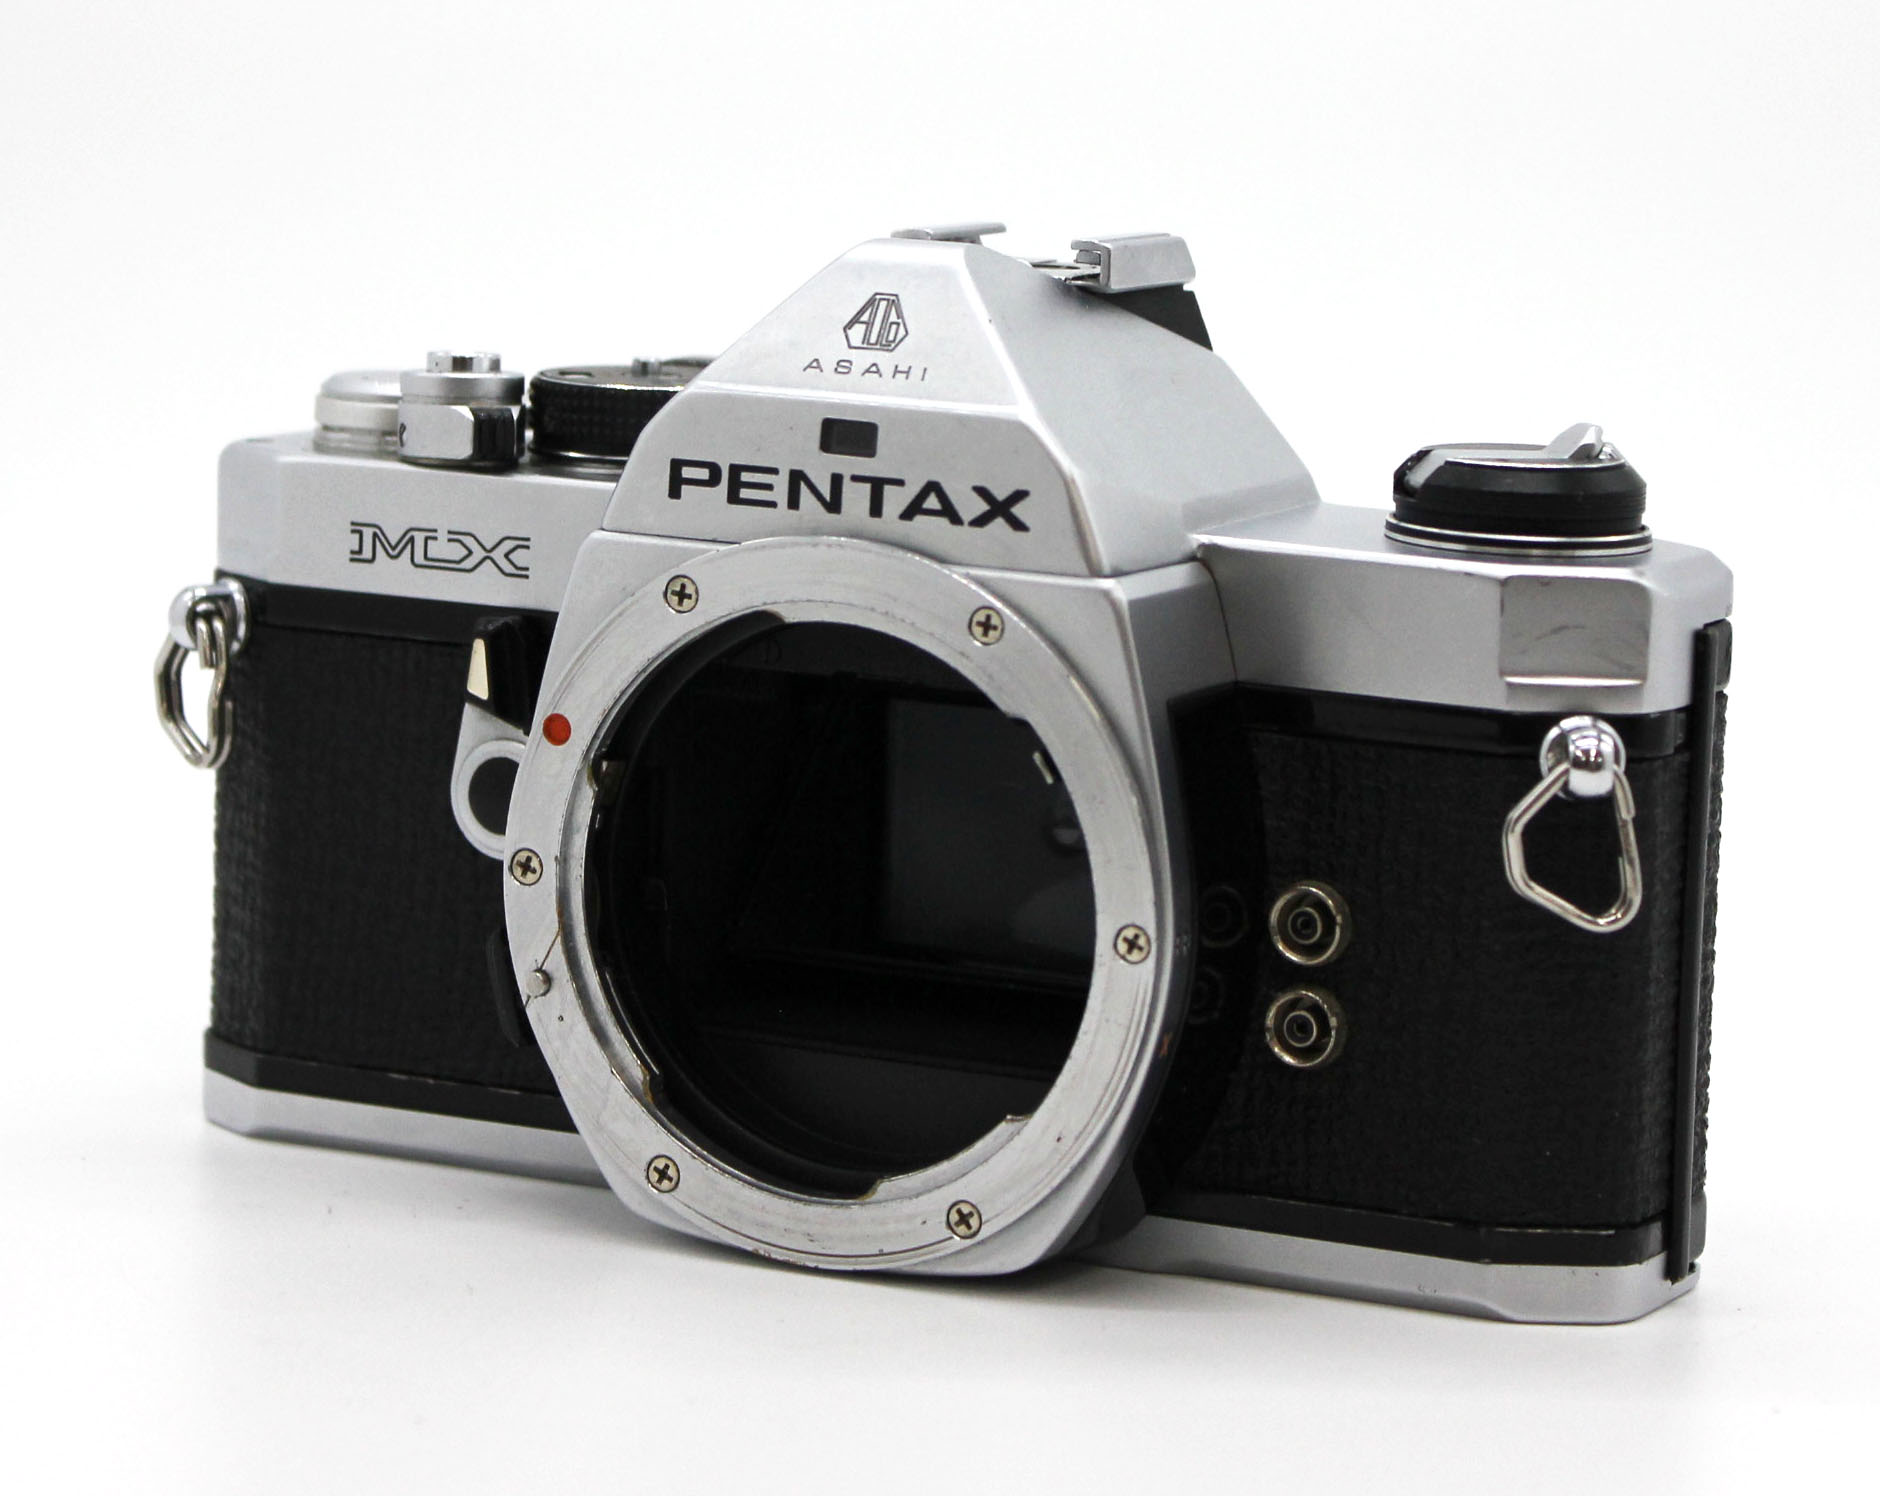 Pentax MX 35mm SLR Film Camera with SMC Pentax-M 50mm F/1.4 Lens from Japan Photo 1